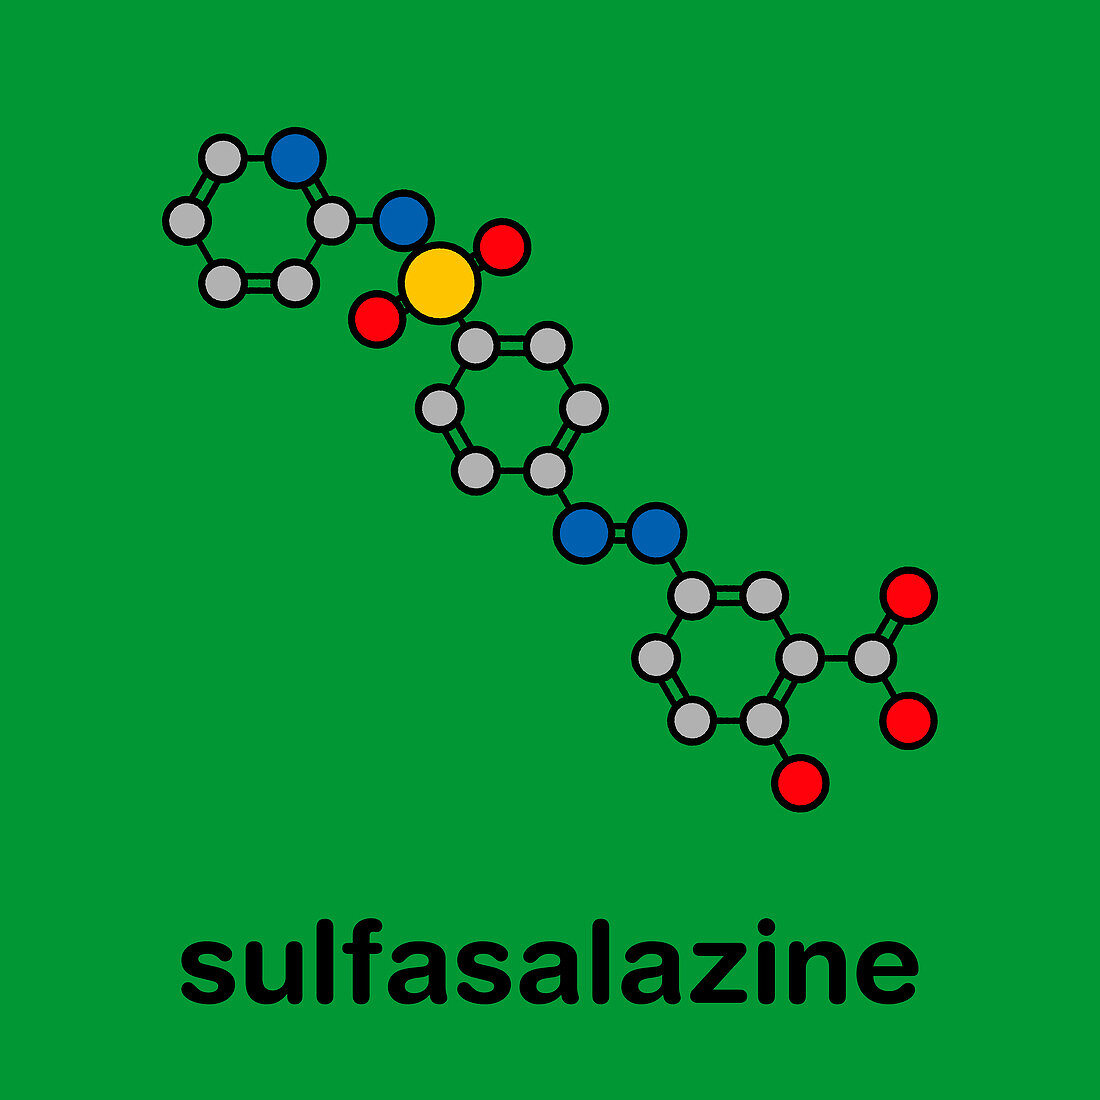 Sulfasalazine drug, molecular model